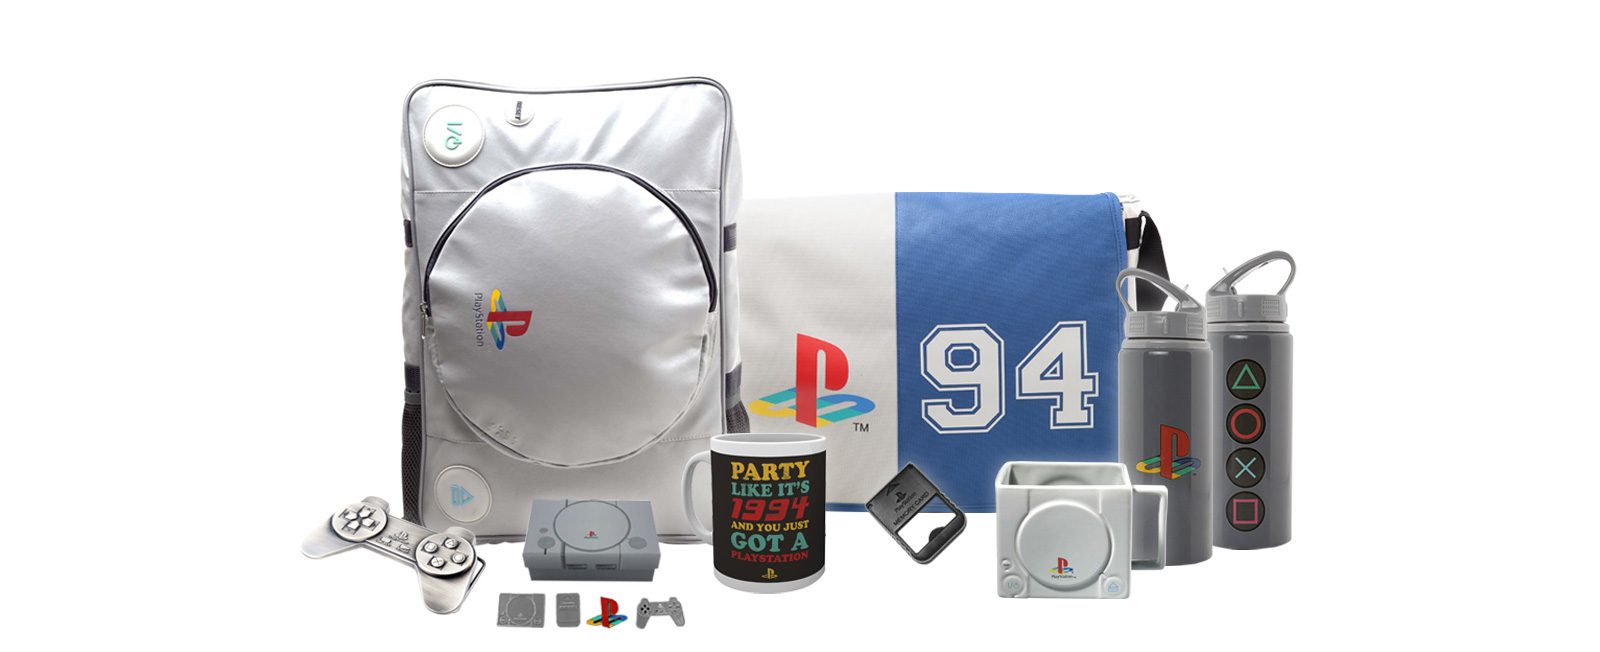 PlayStation Gear merchandise